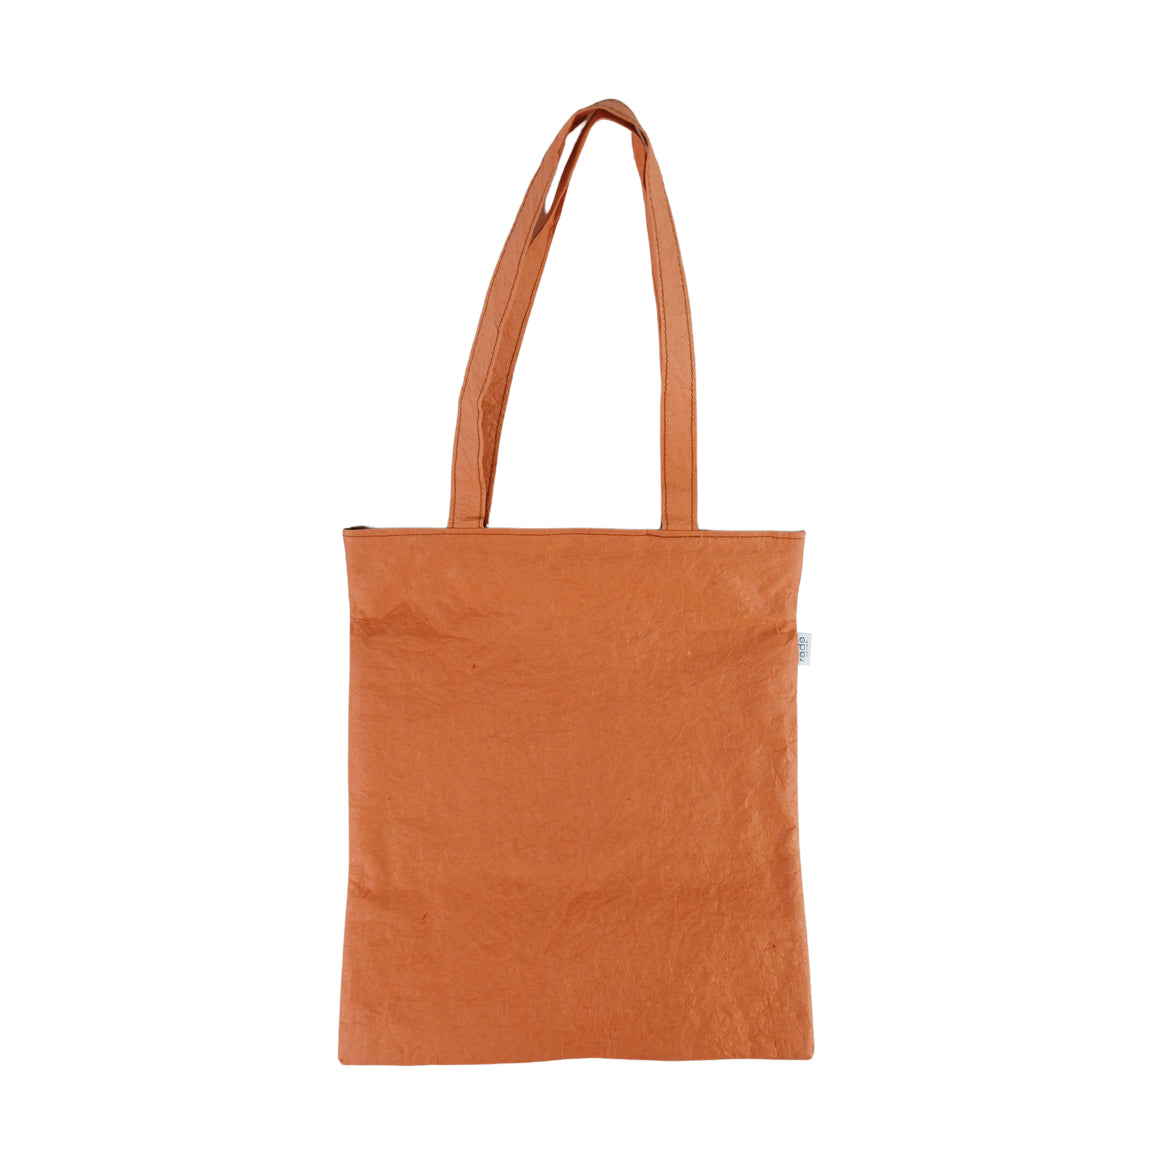 Paper Leather Tote Bag - RADA COLLAB